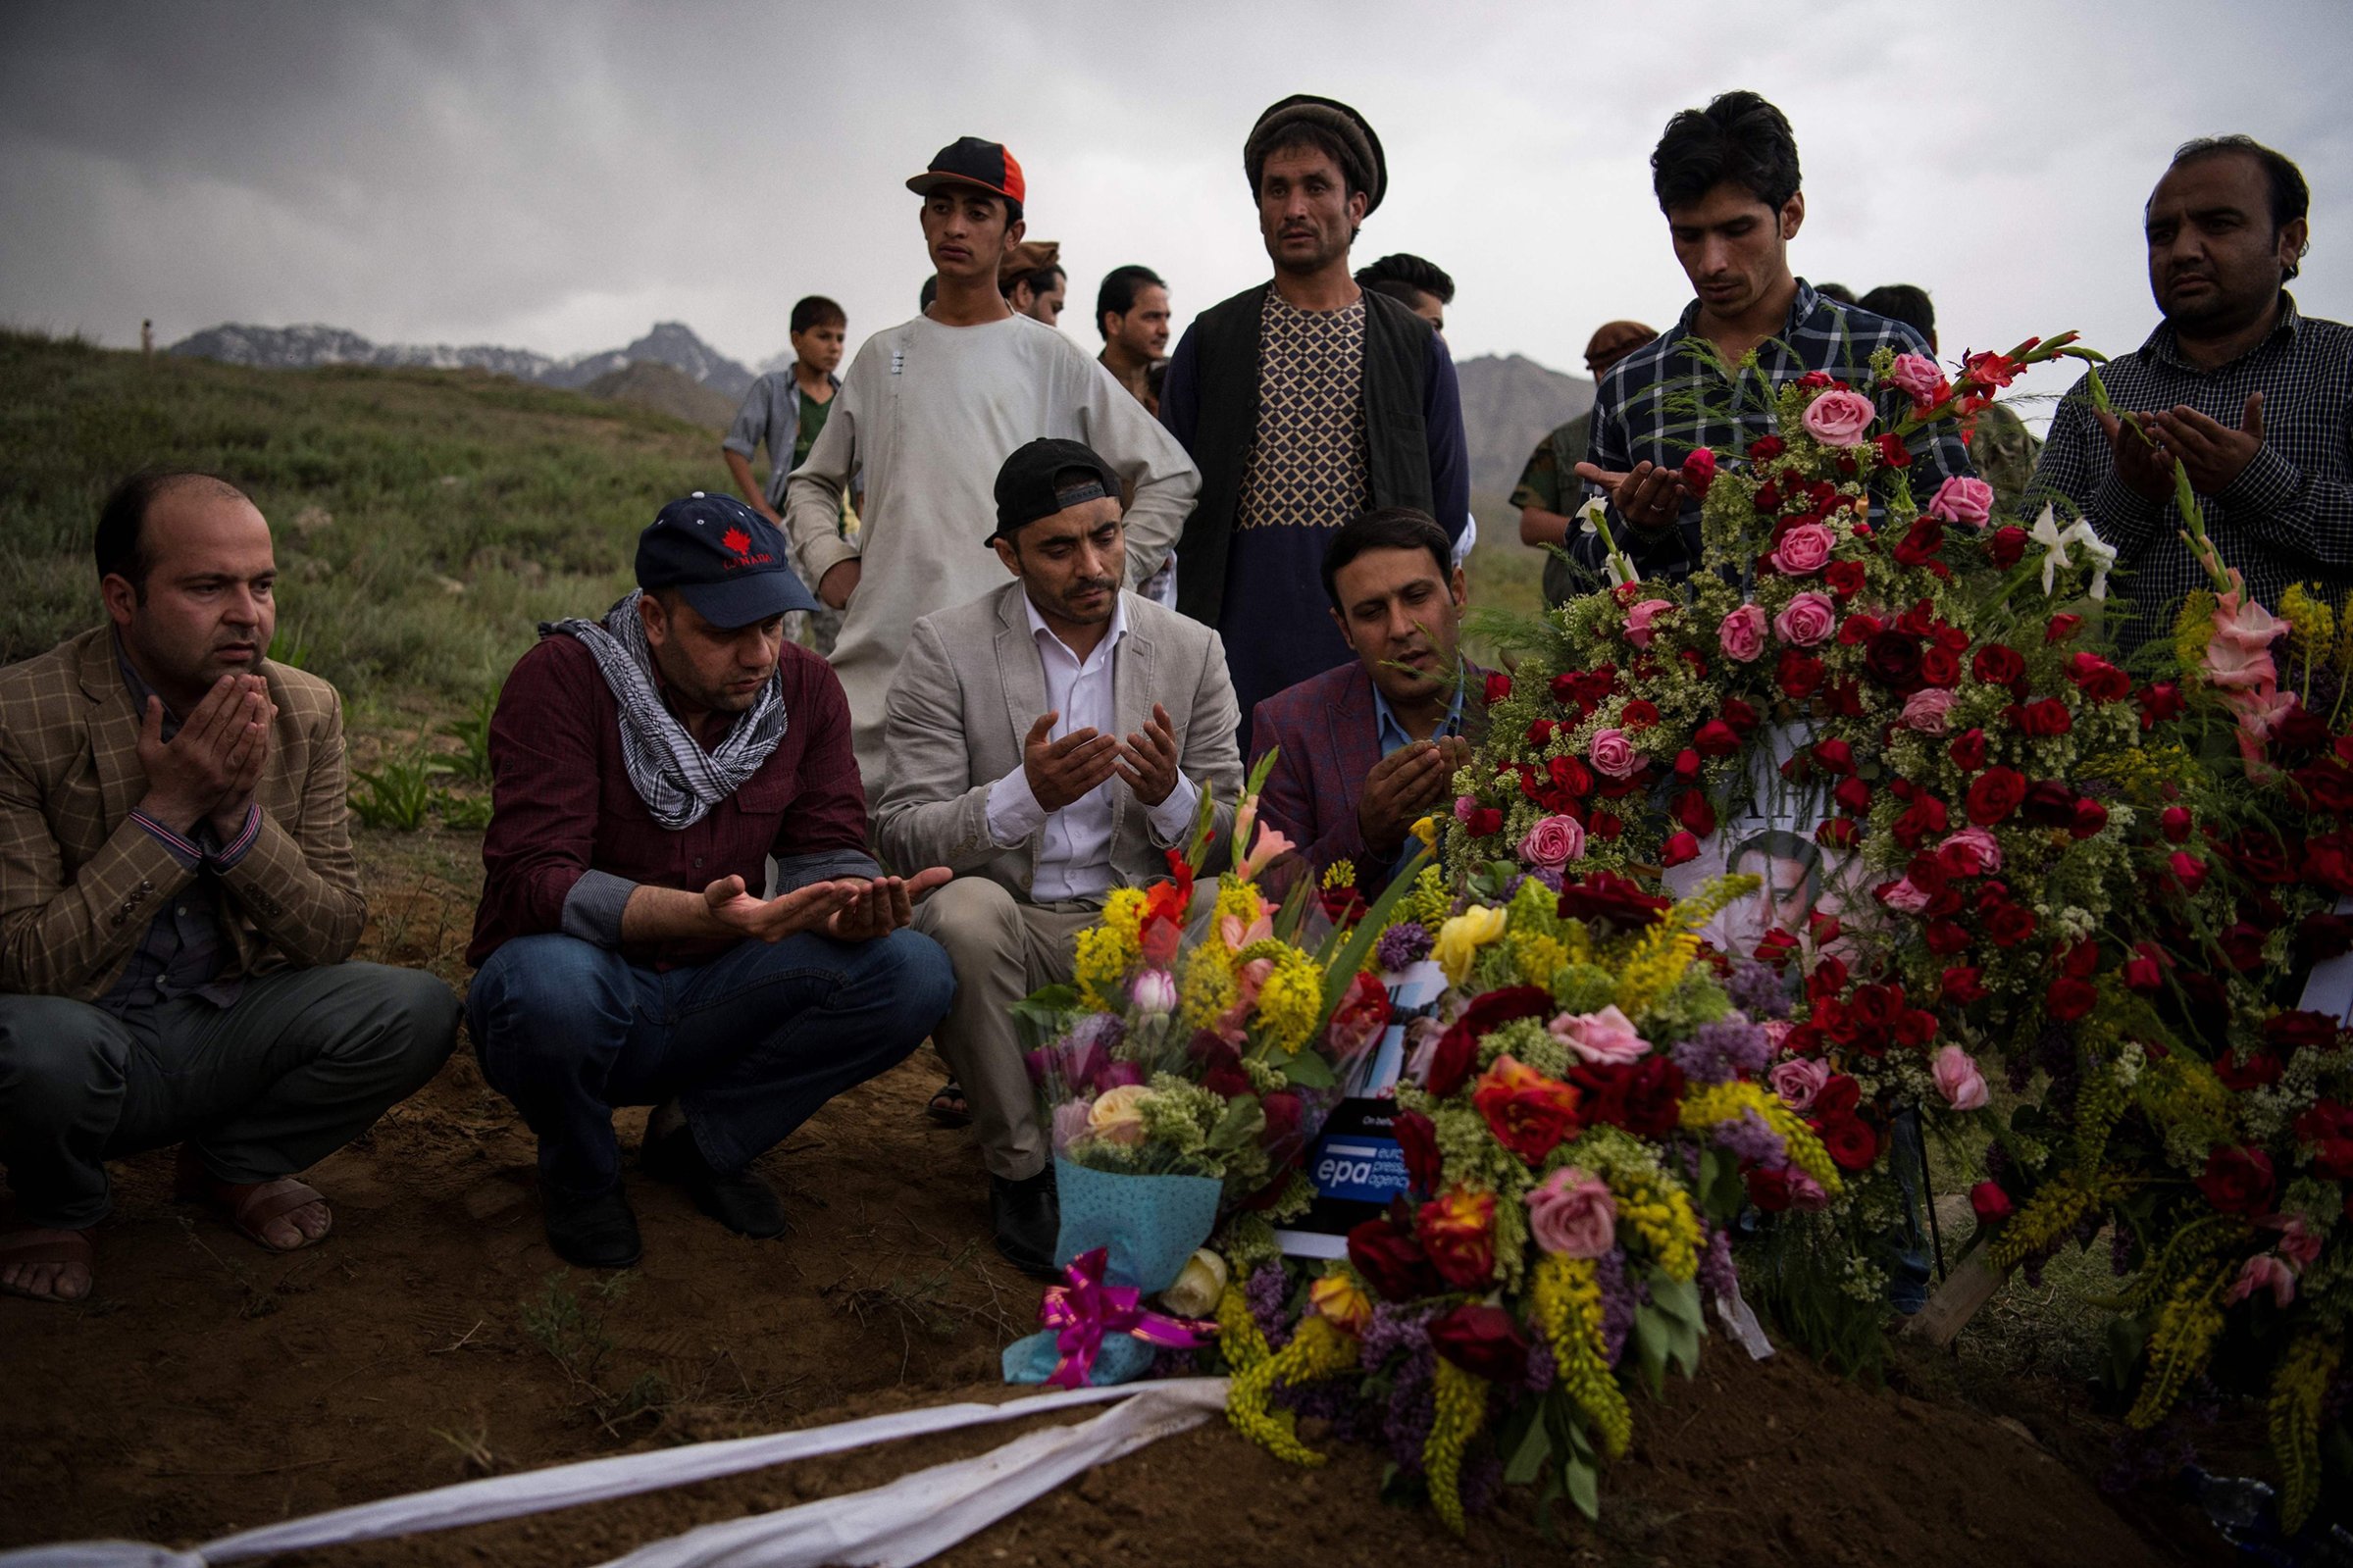 Marai Afghanistan Photographer Killed Funeral